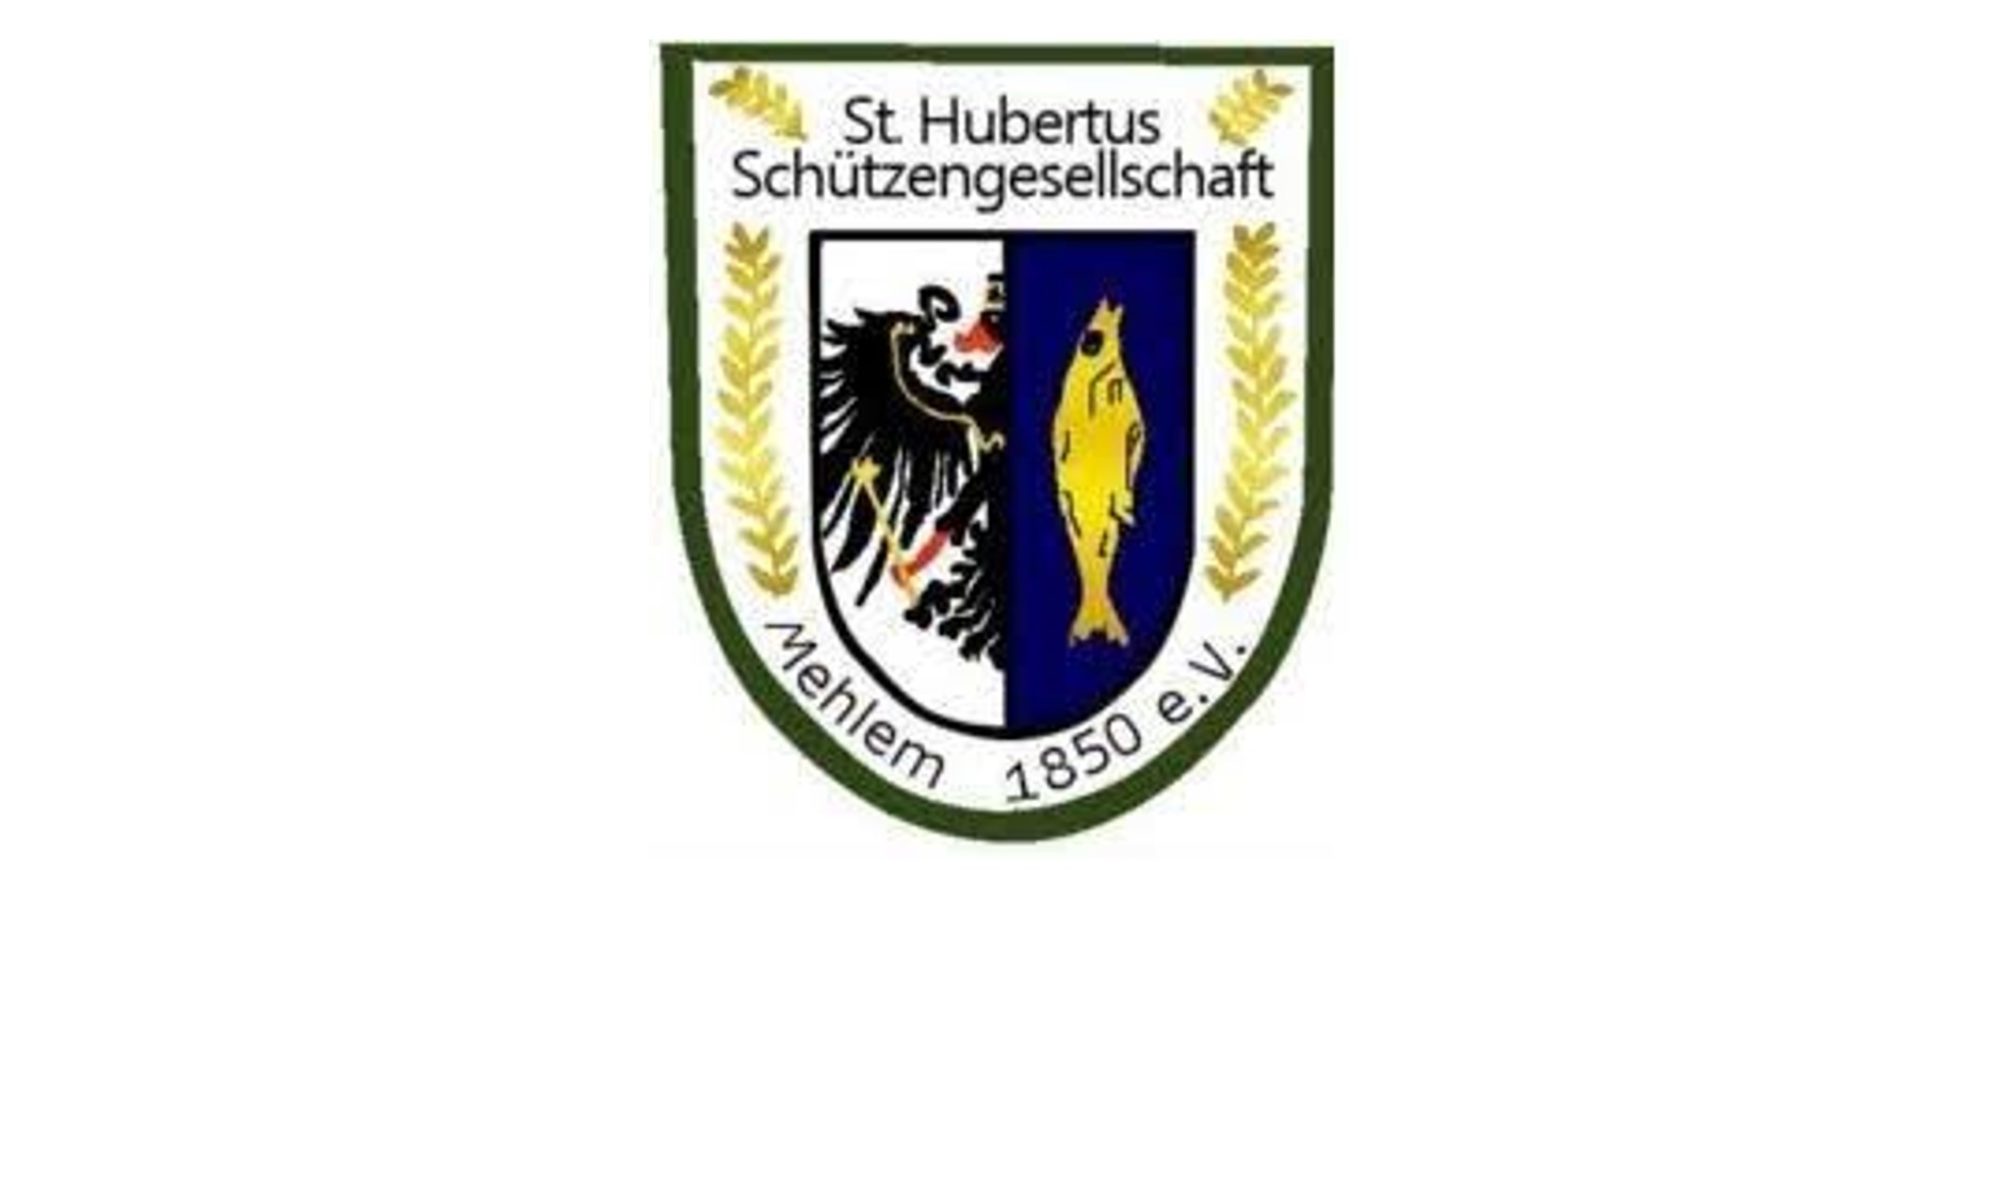 St. Hubertus Schützengesellschaft Mehlem 1850 e.V.